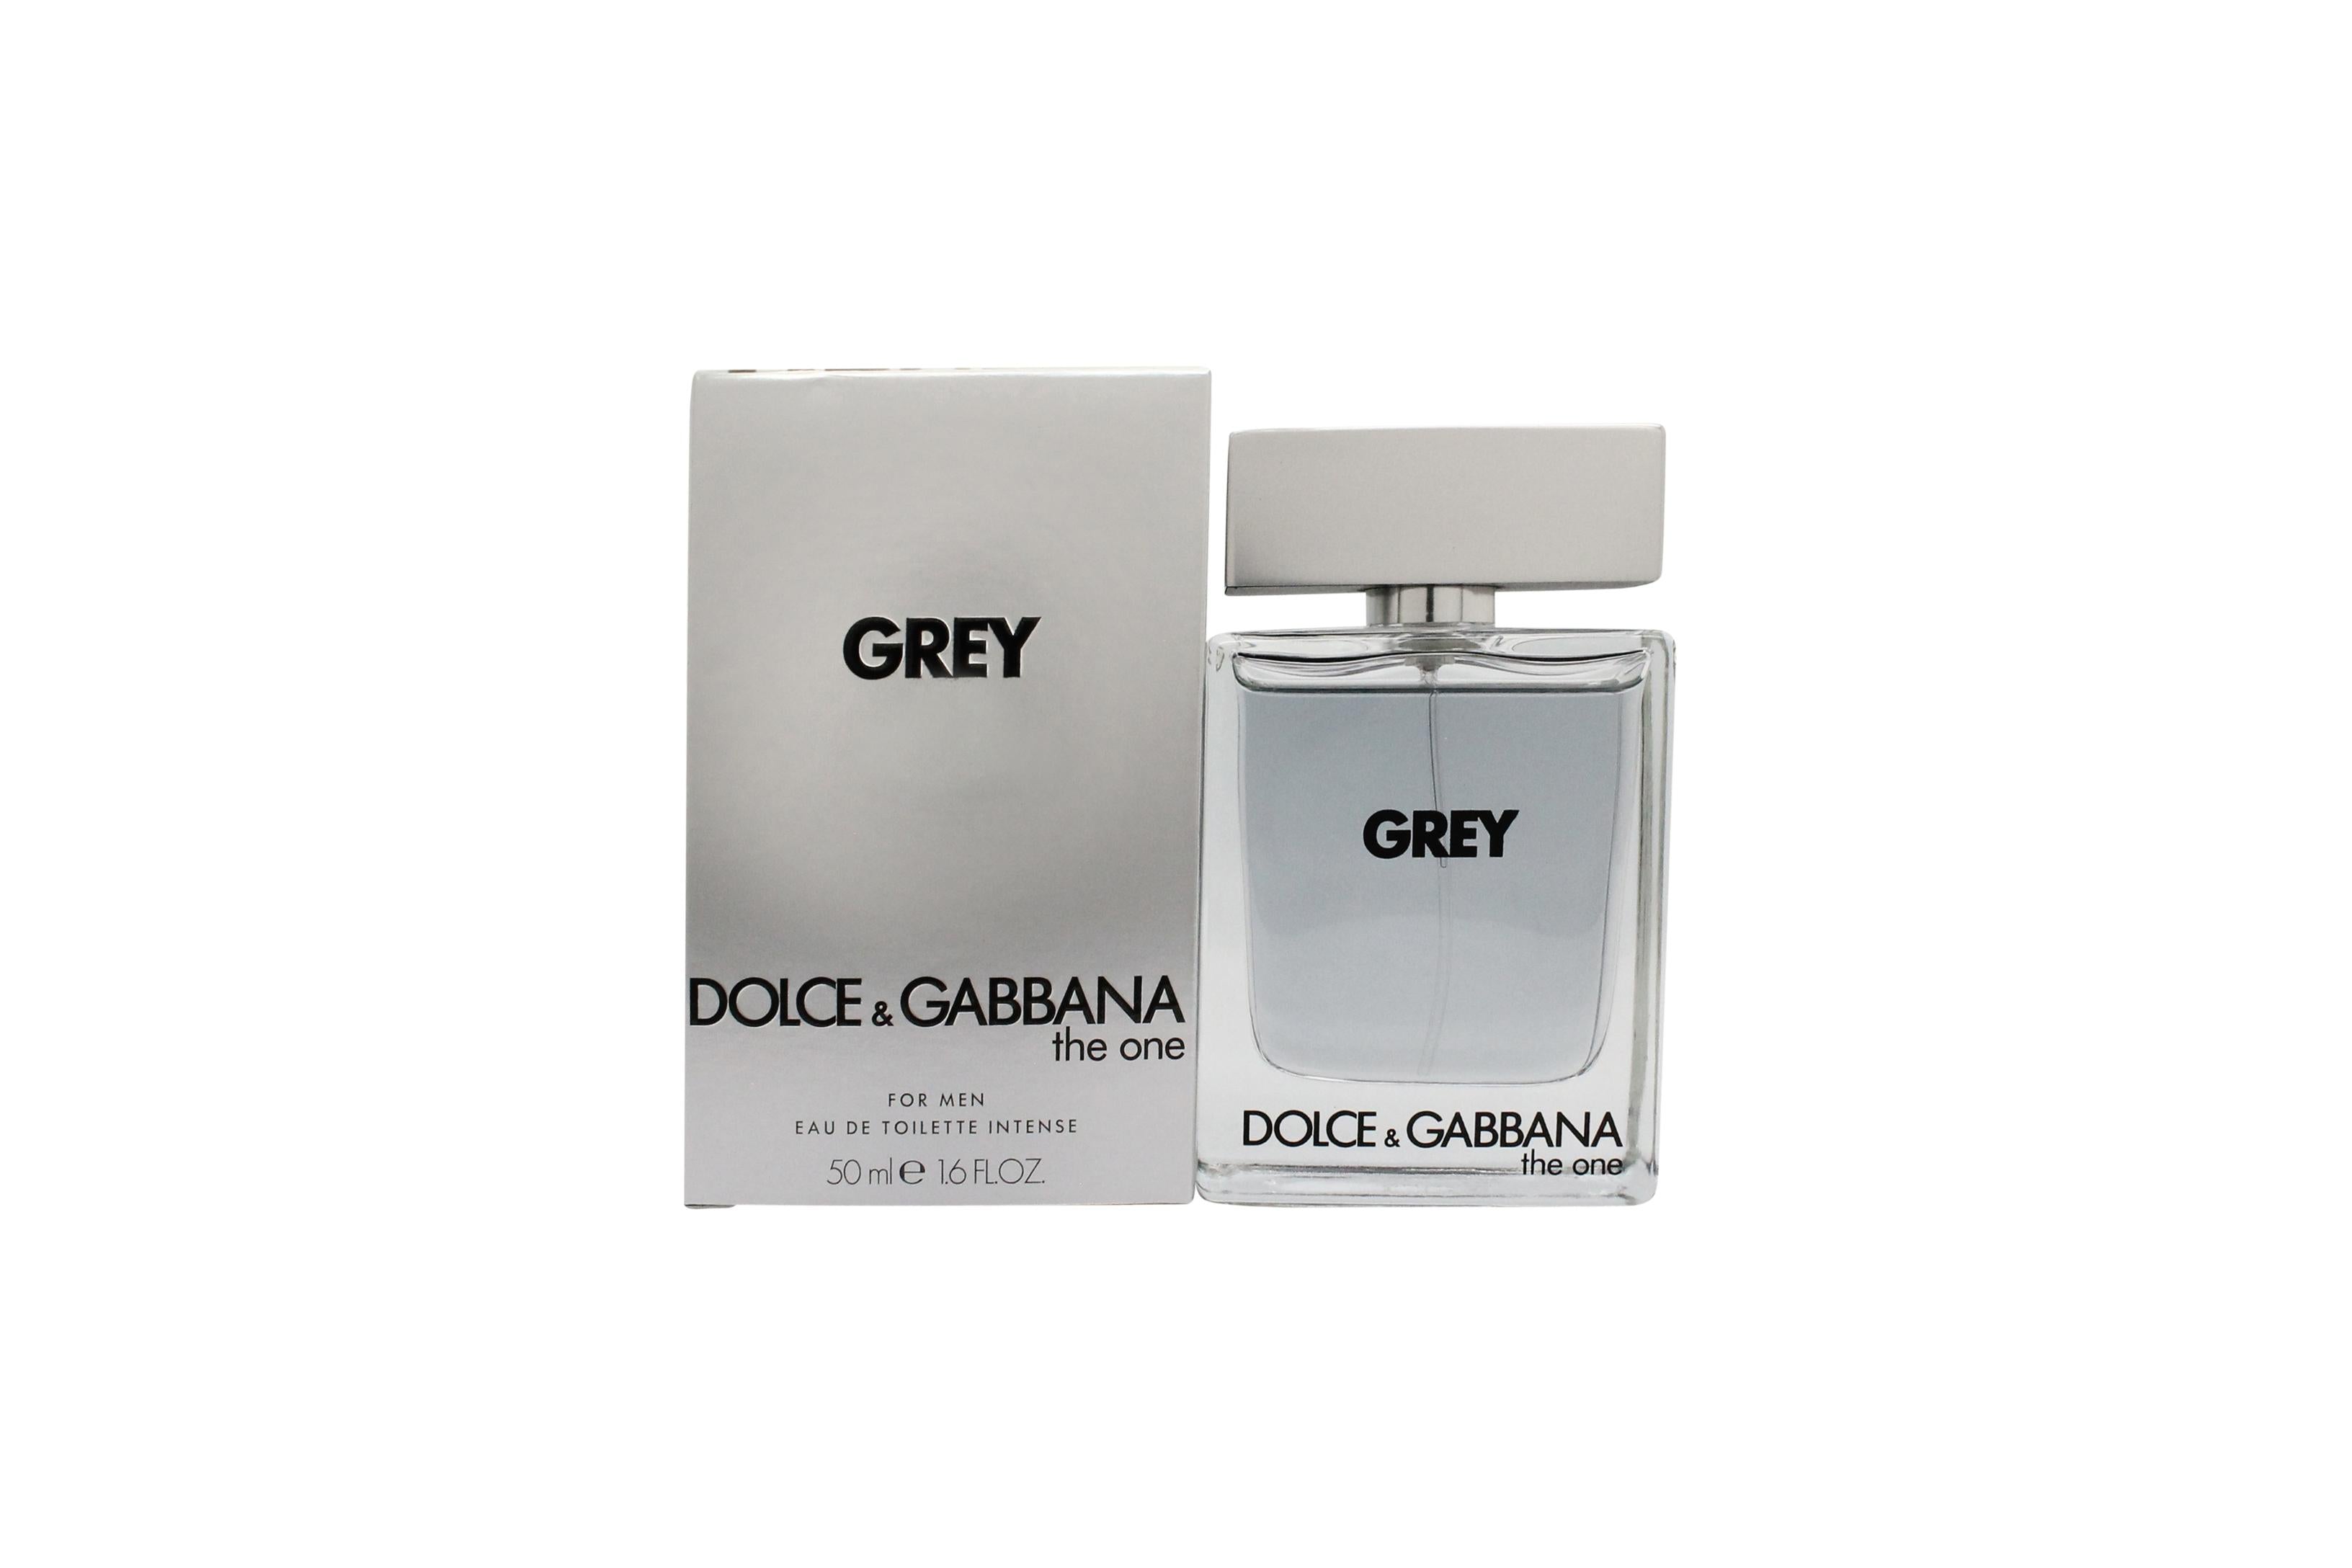 View Dolce Gabbana The One Grey Intense Eau de Toilette 50ml Spray information